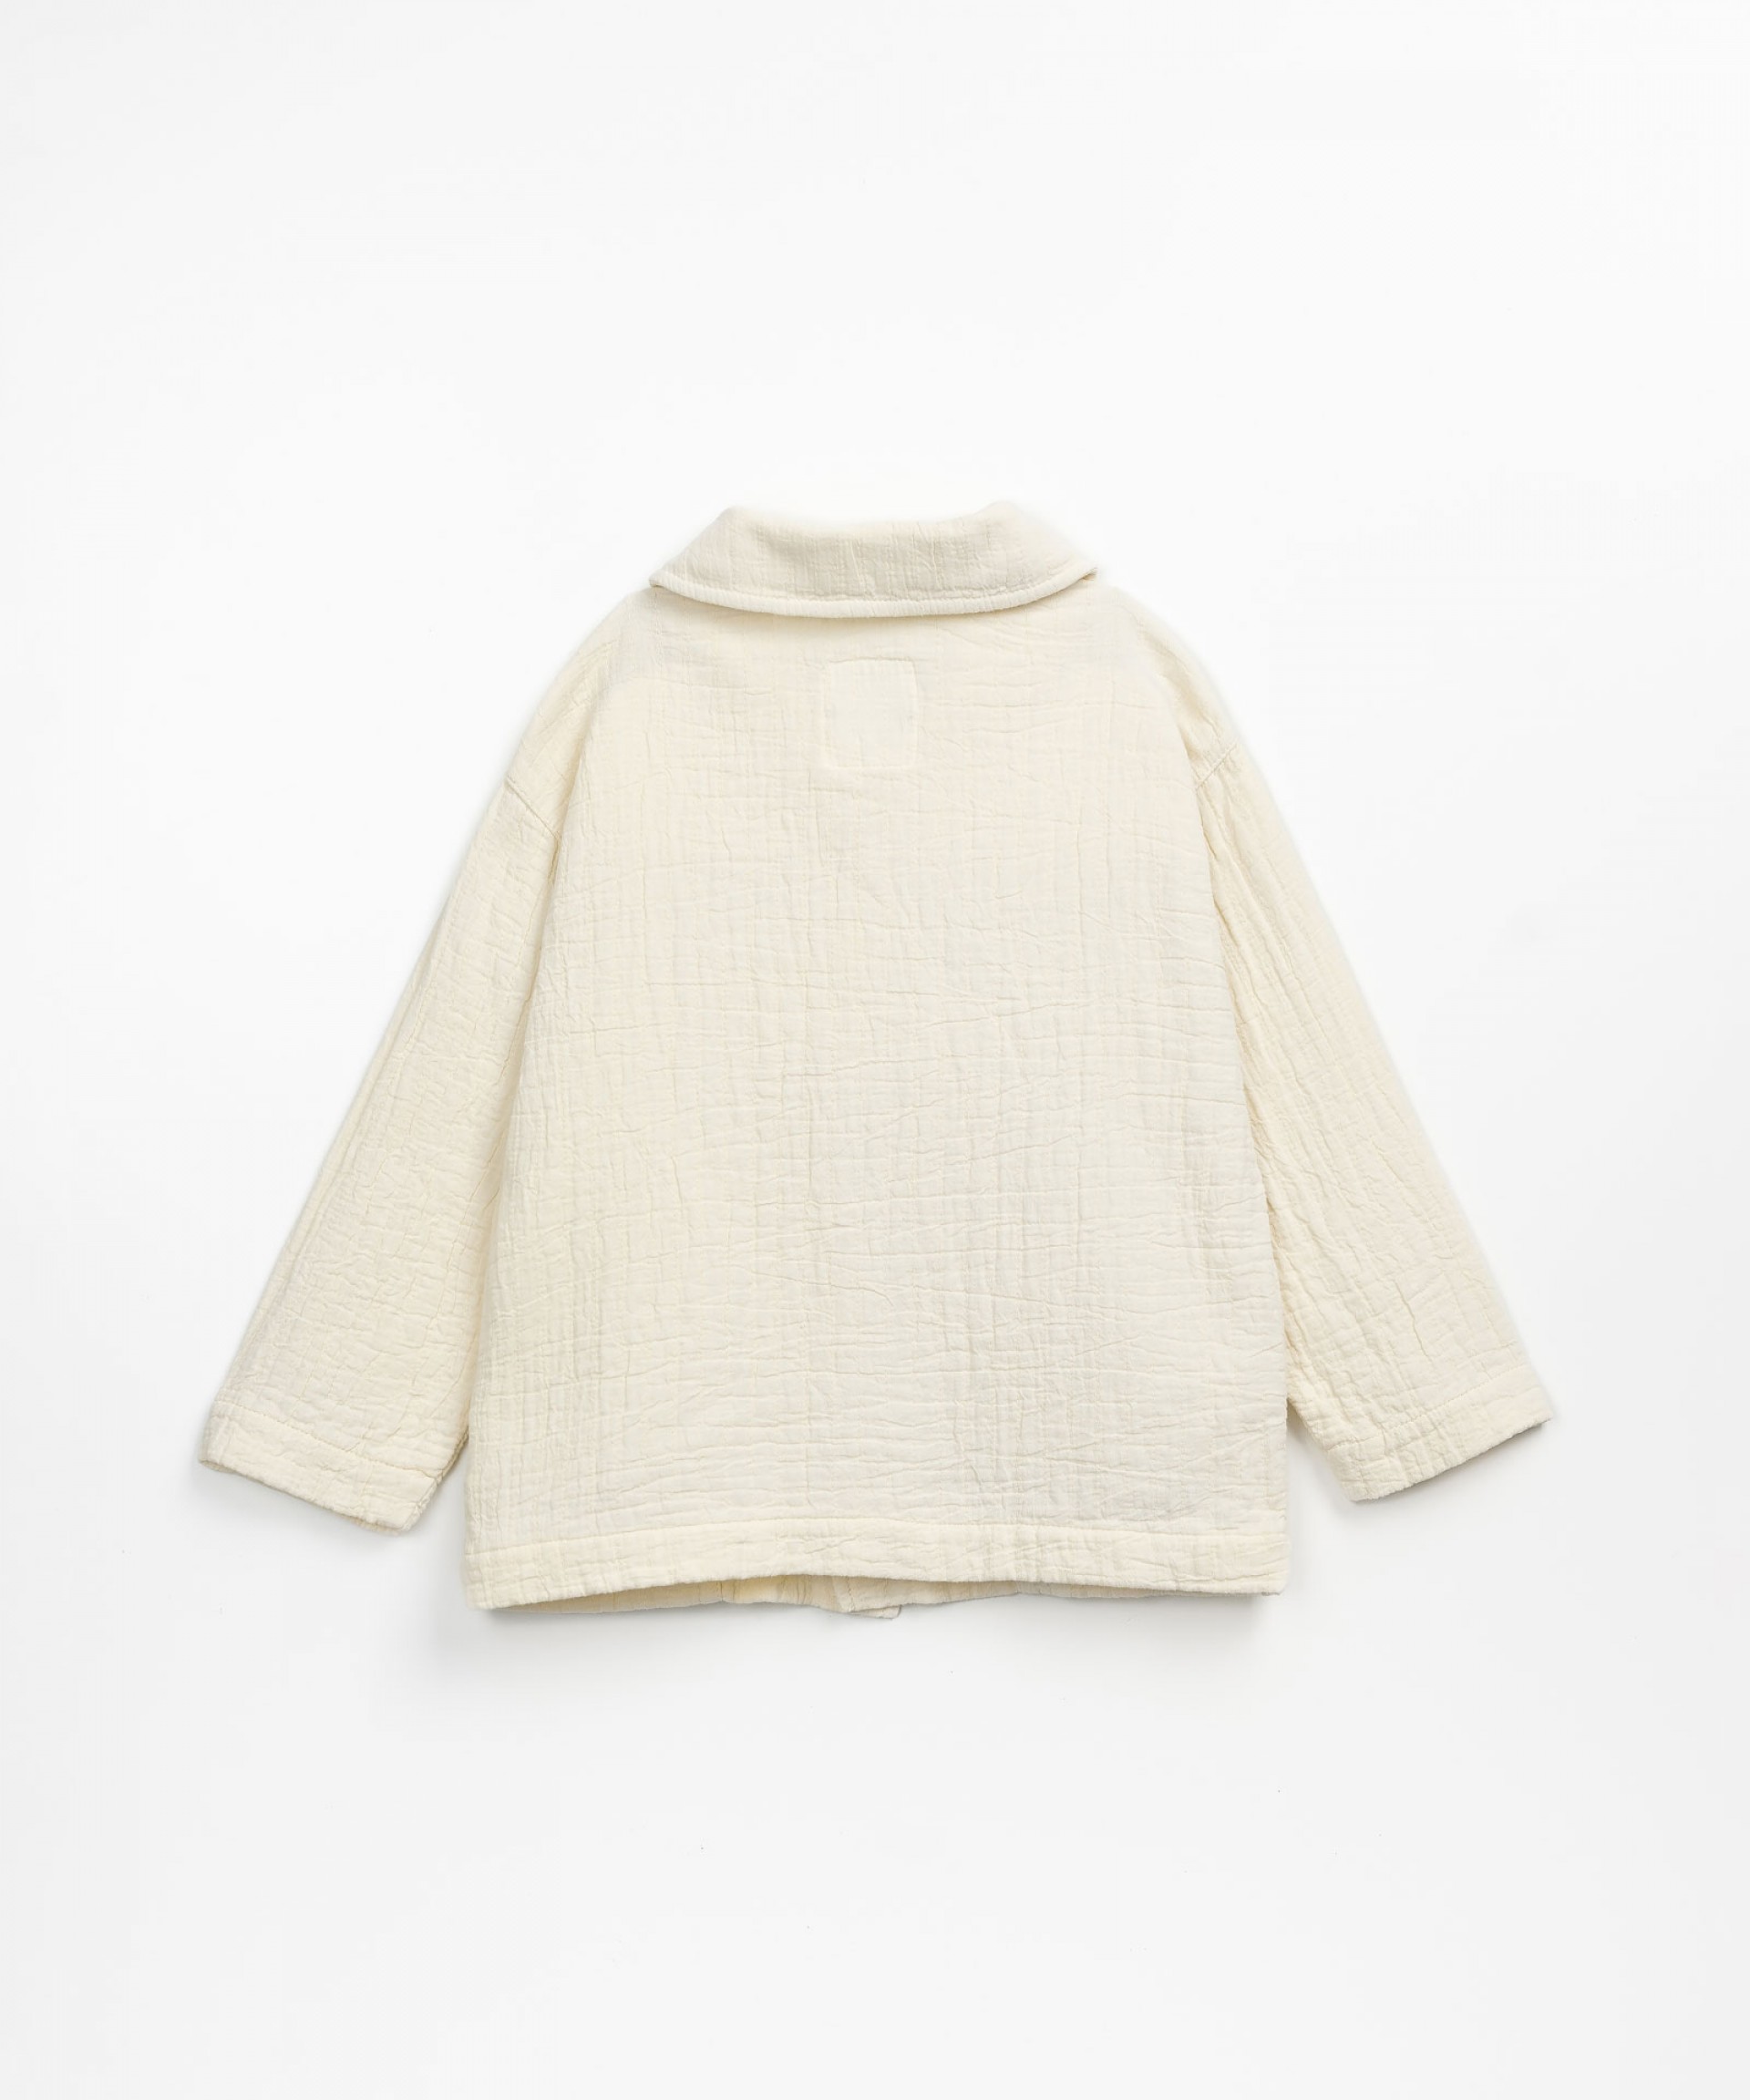 Woven cotton shirt | Textile Art